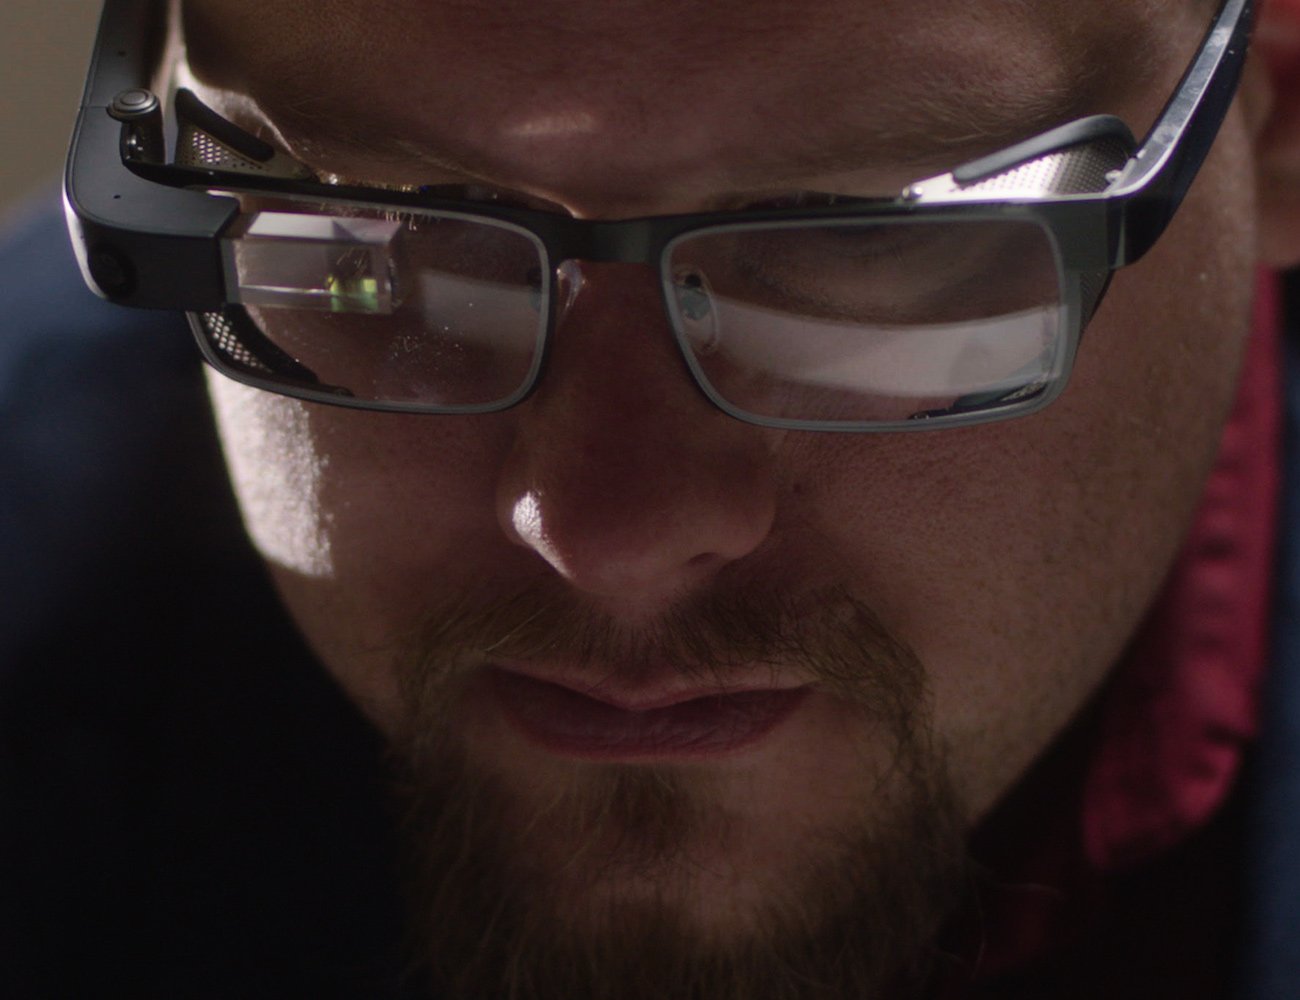 Google Glass Enterprise Edition 2 Smart Glasses will make you more efficient